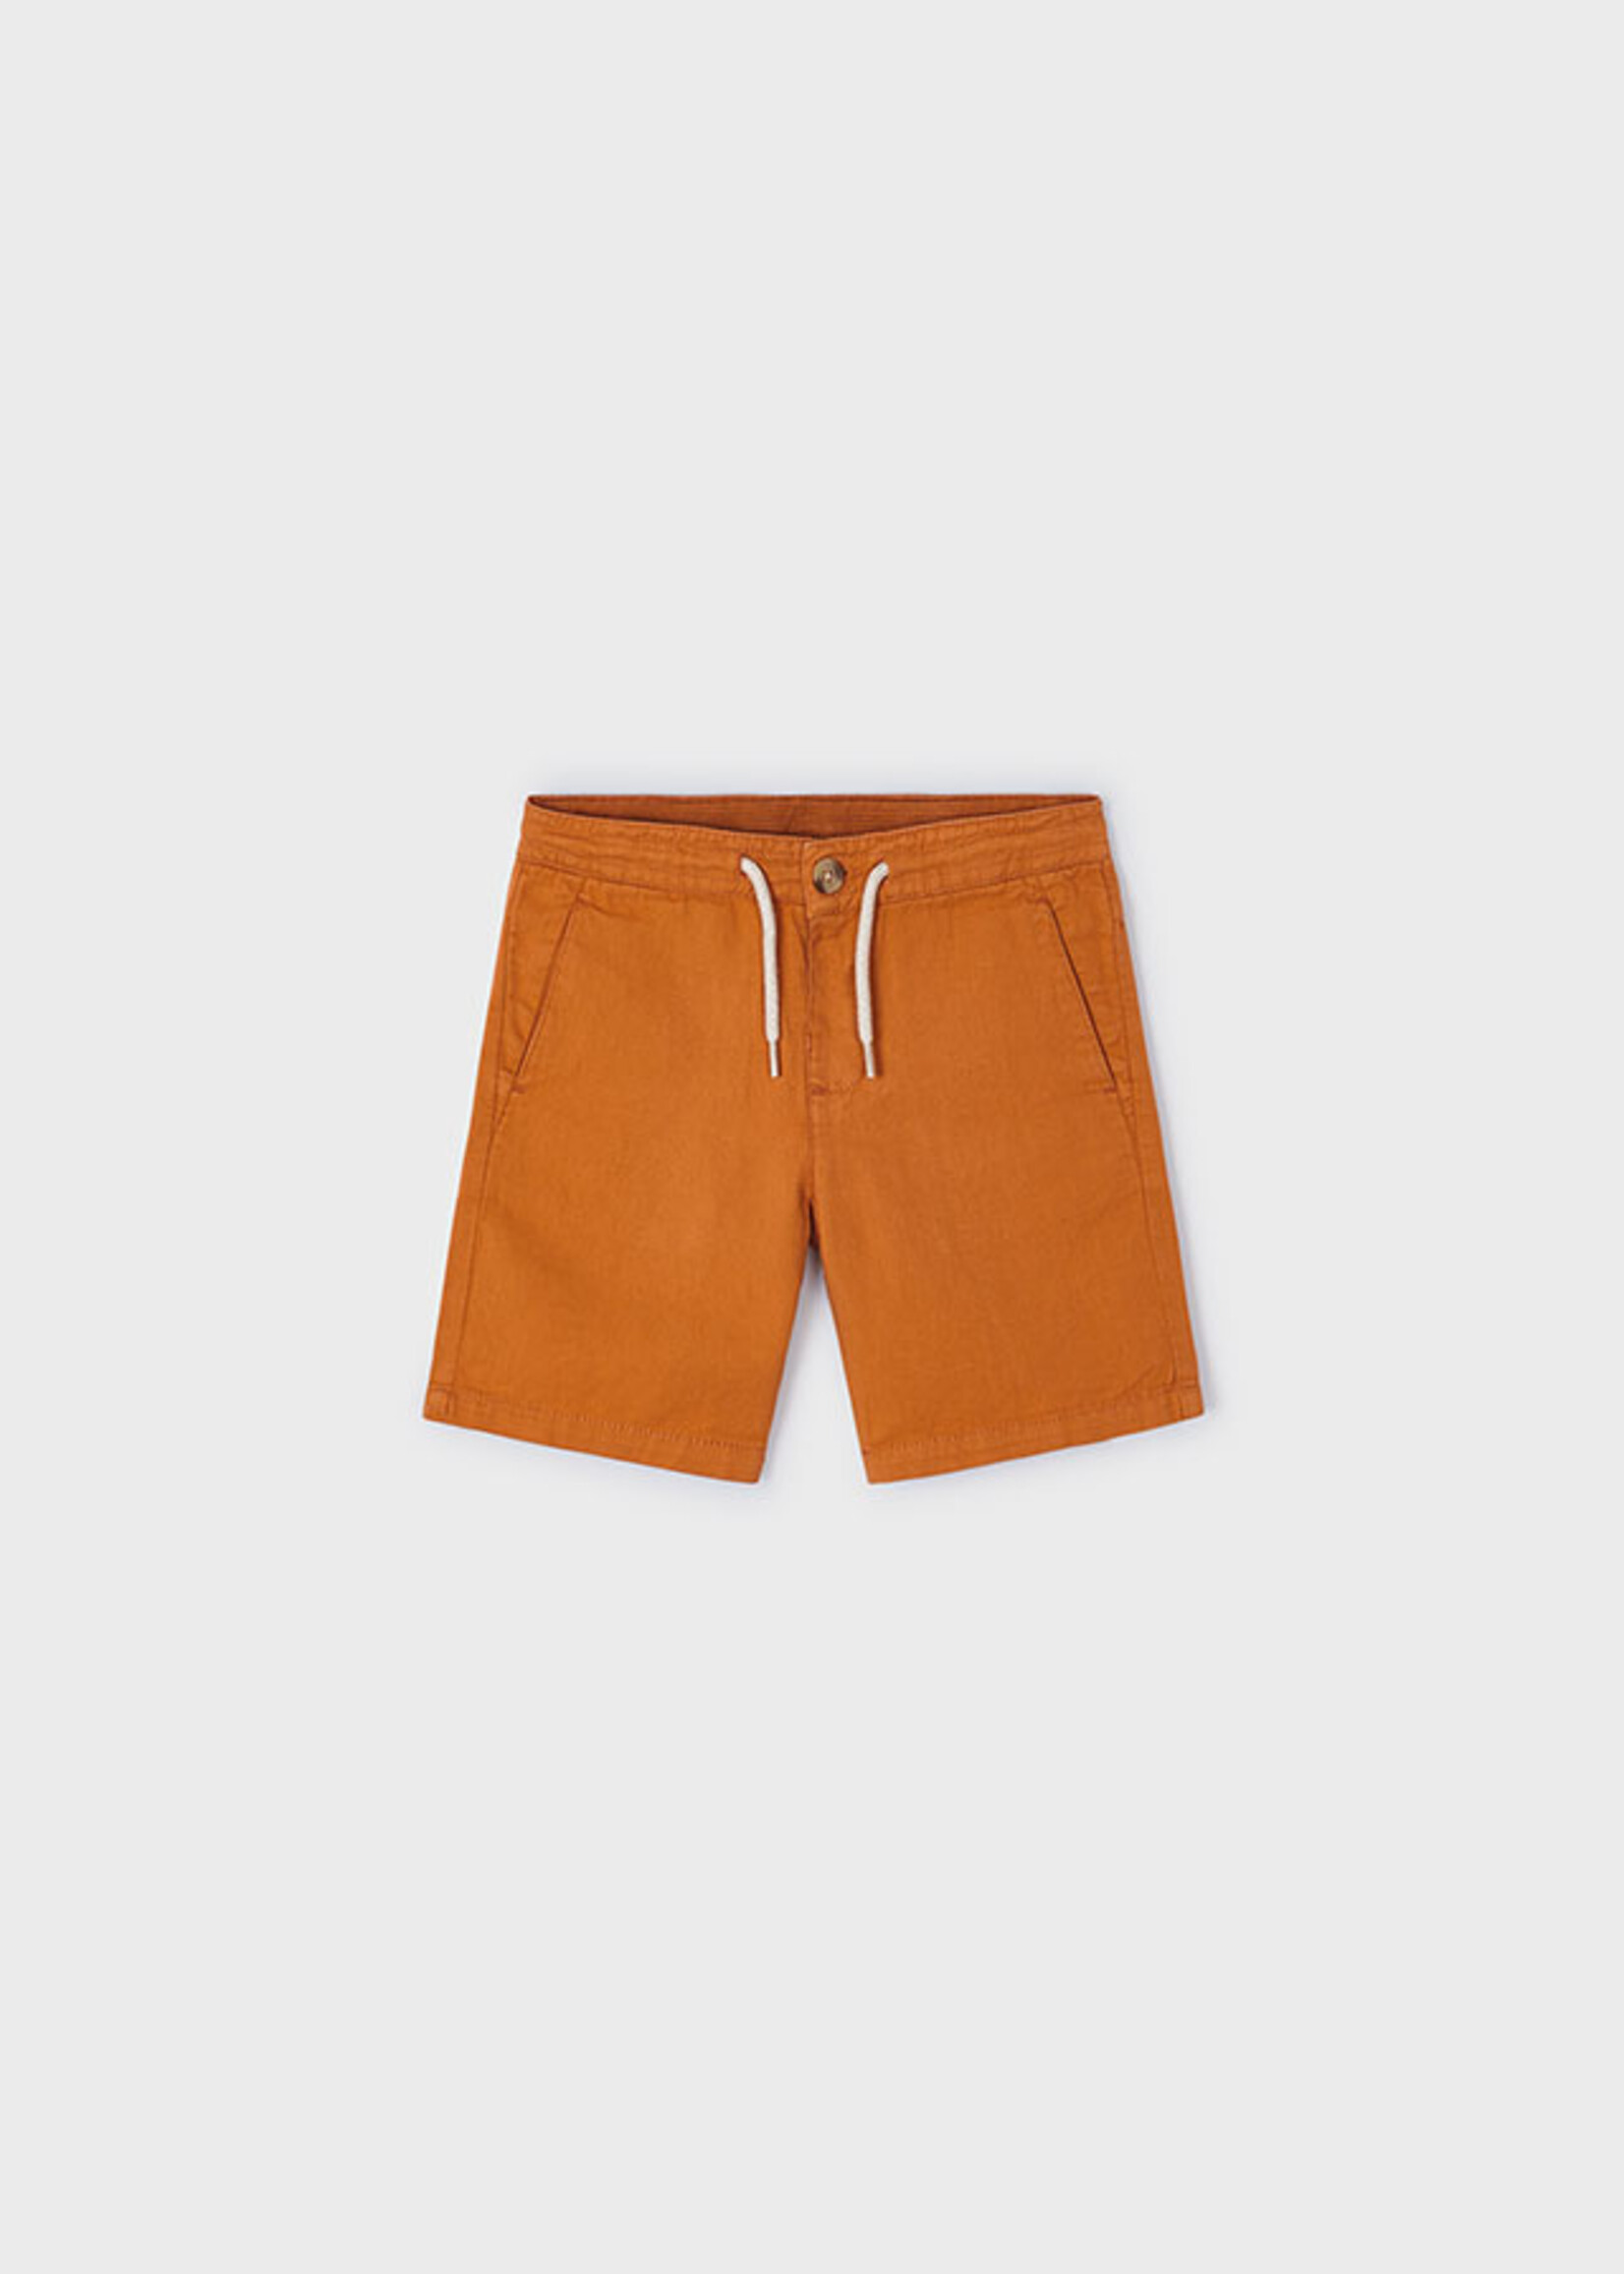 Mayoral Mini Boy             3249 Linen shorts                  Paprika